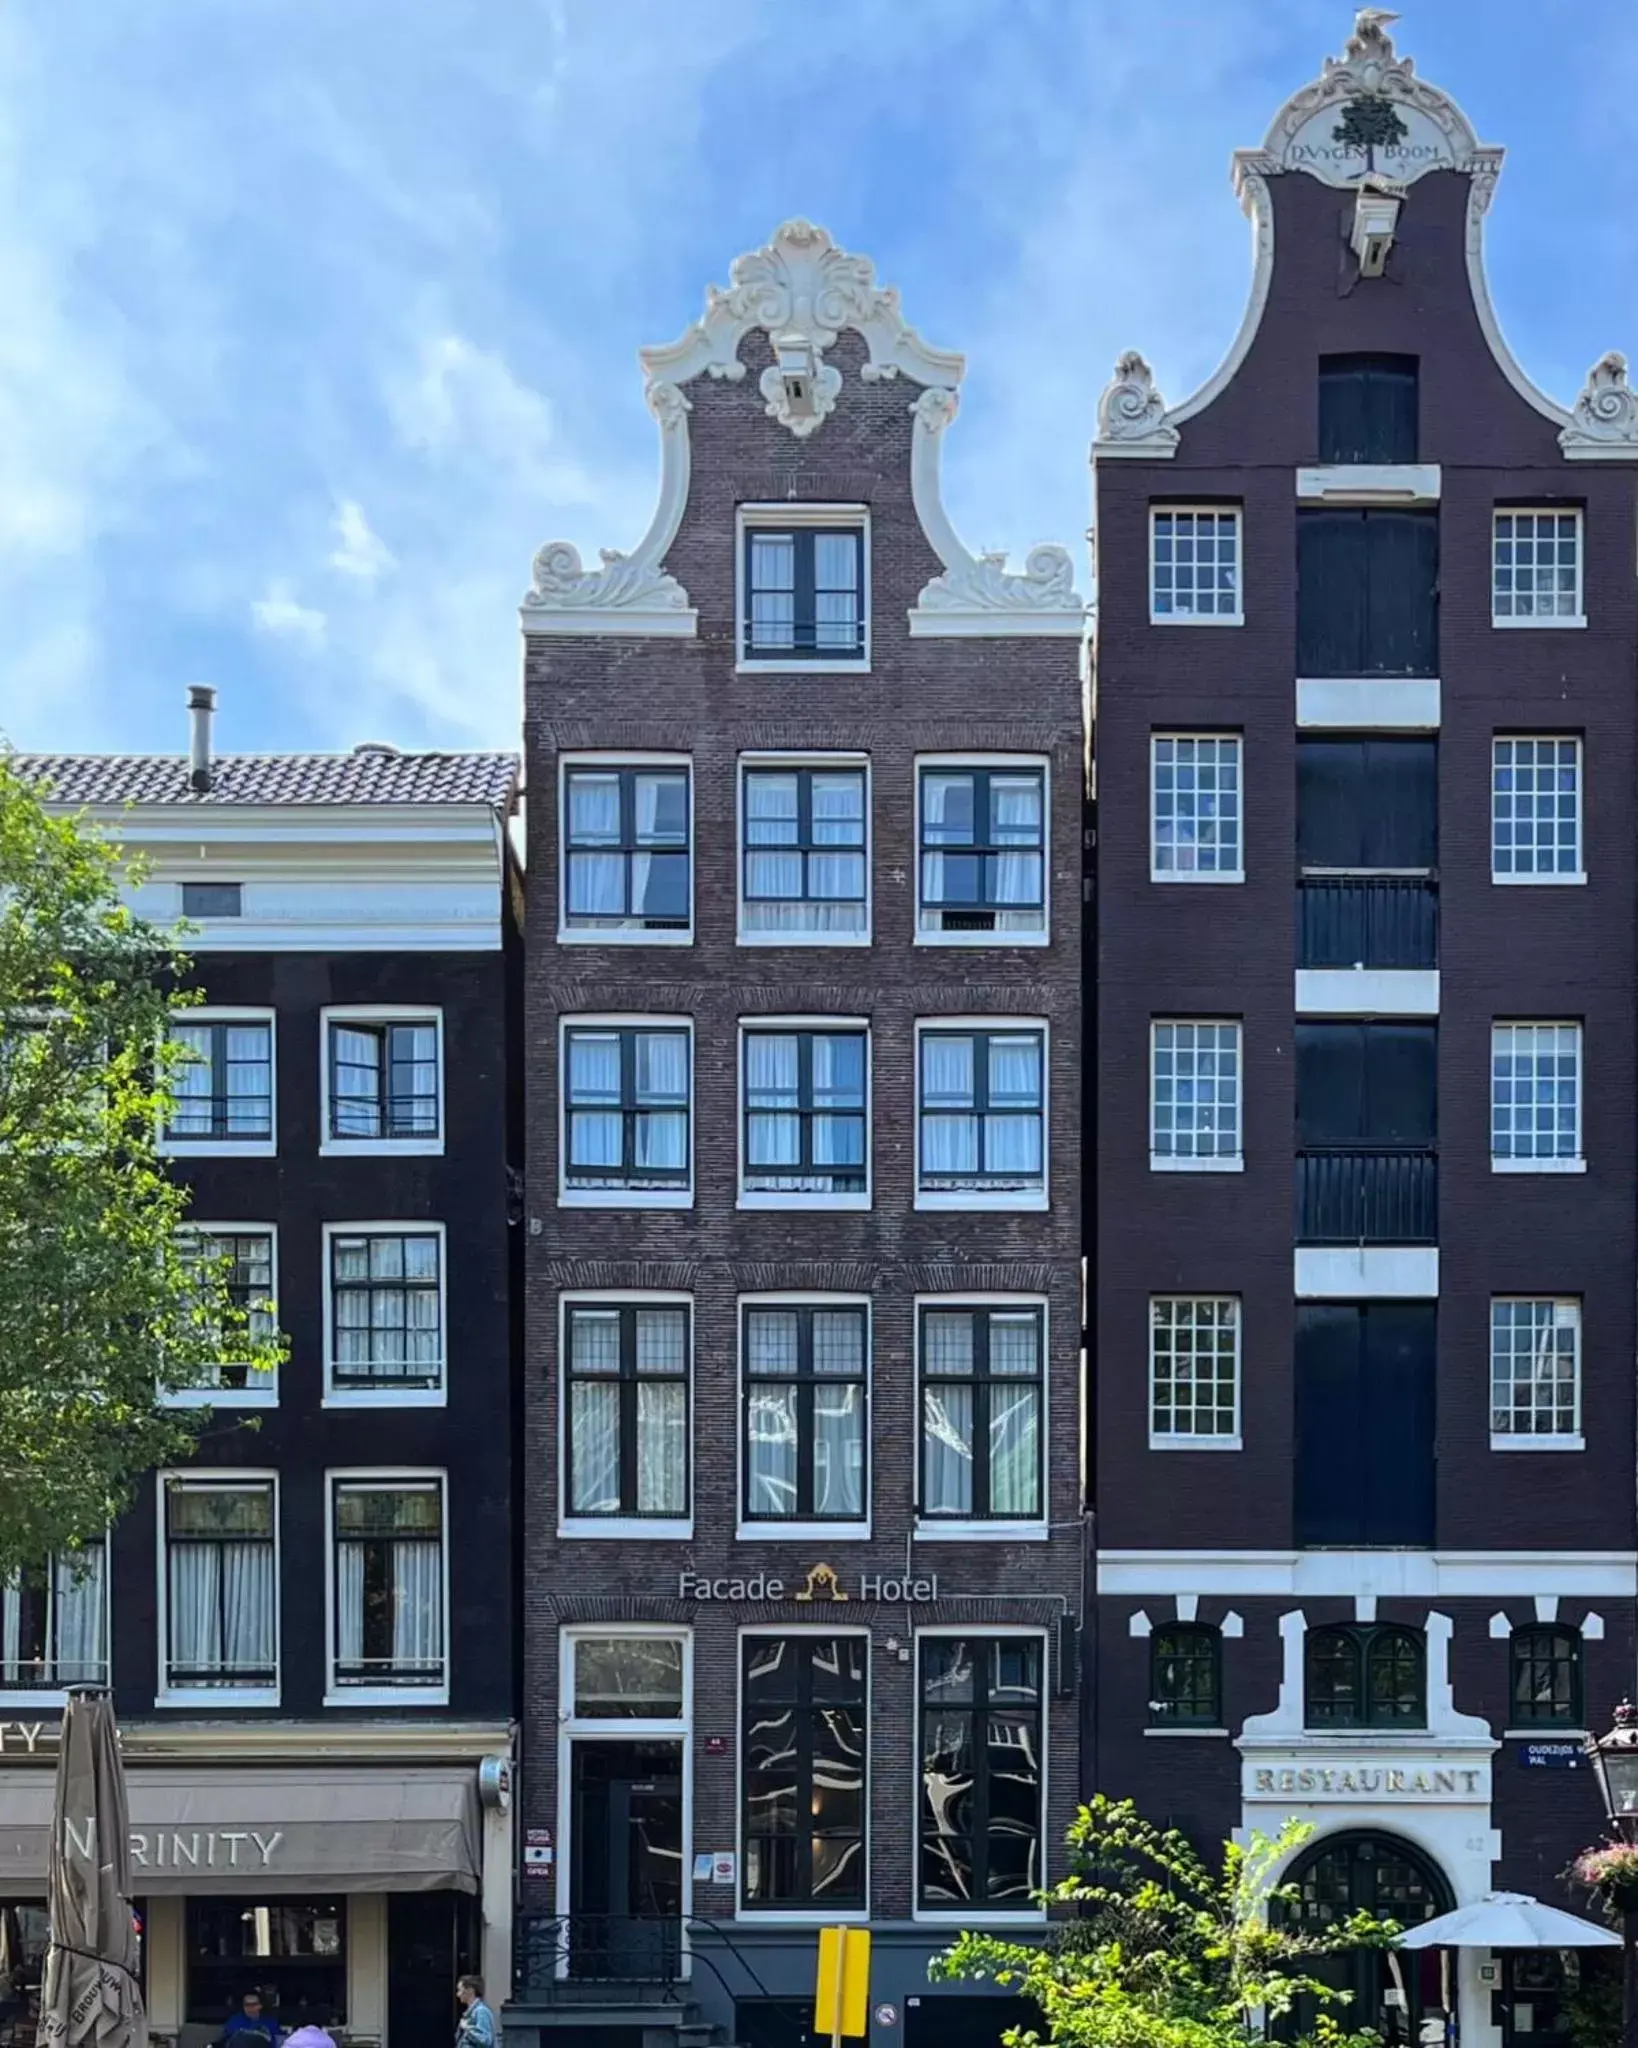 Property Building in Facade Hotel Amsterdam